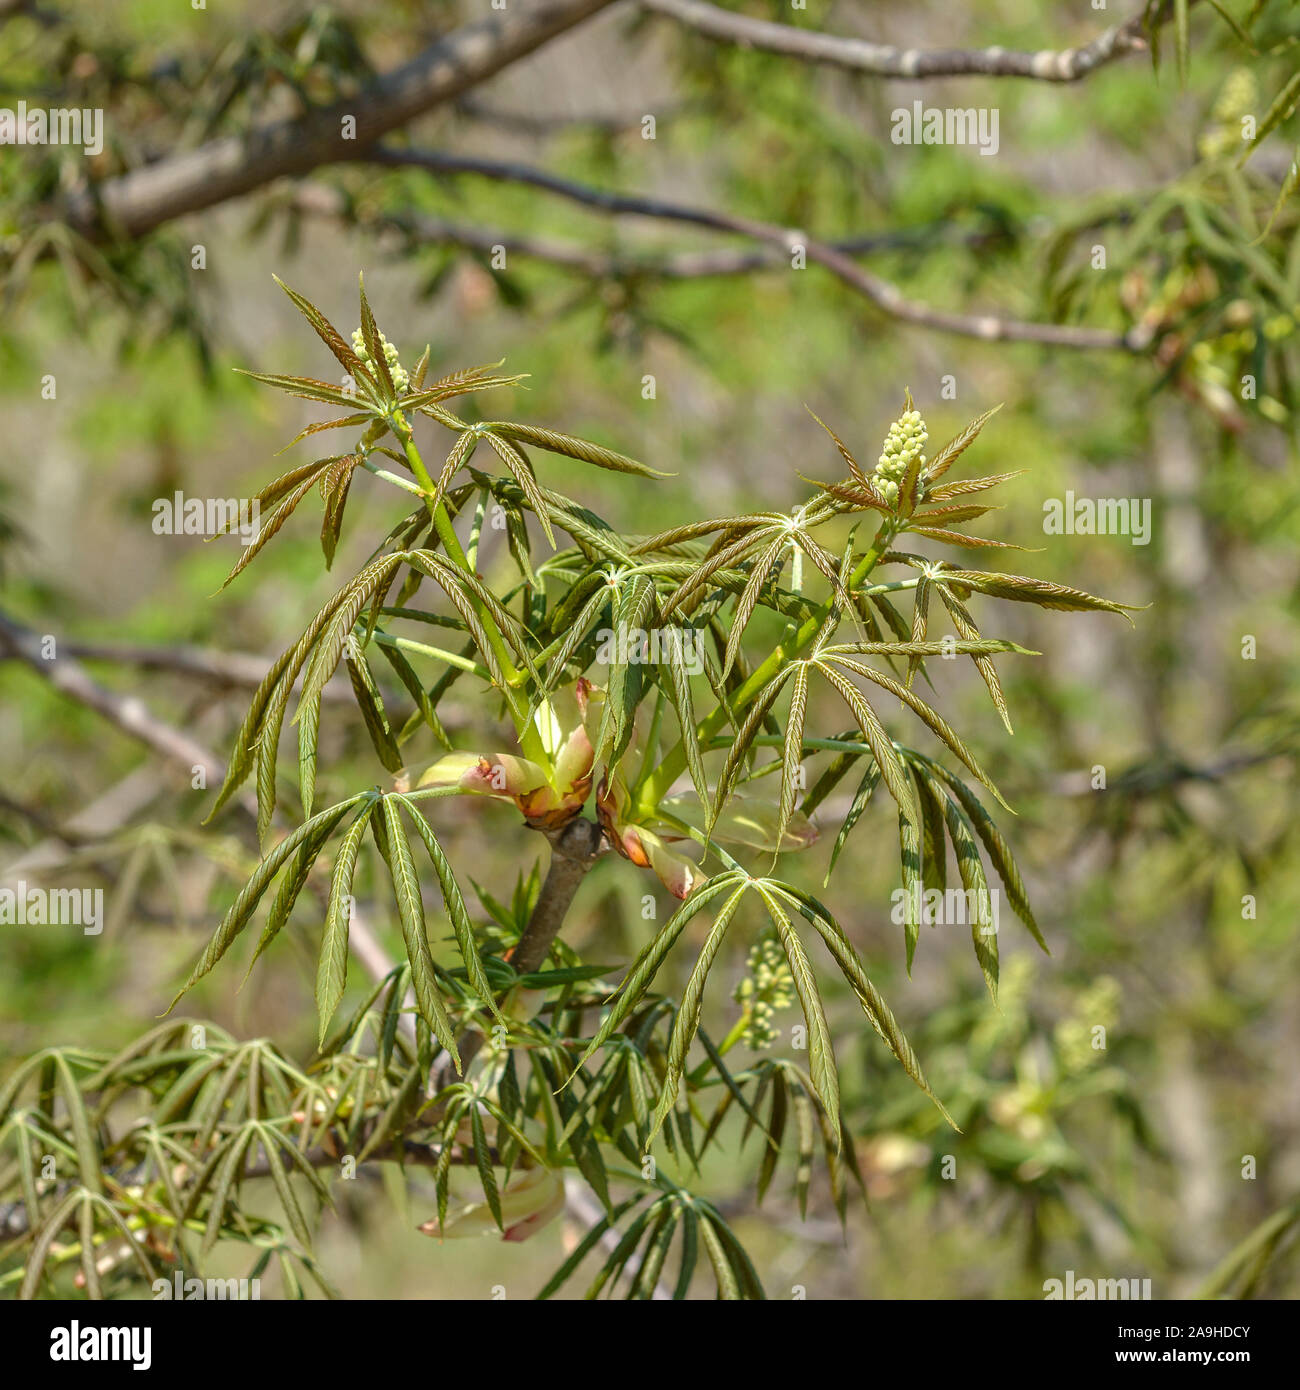 Ohio-Rosskastanie (Aesculus glabra var. glabra) Stock Photo